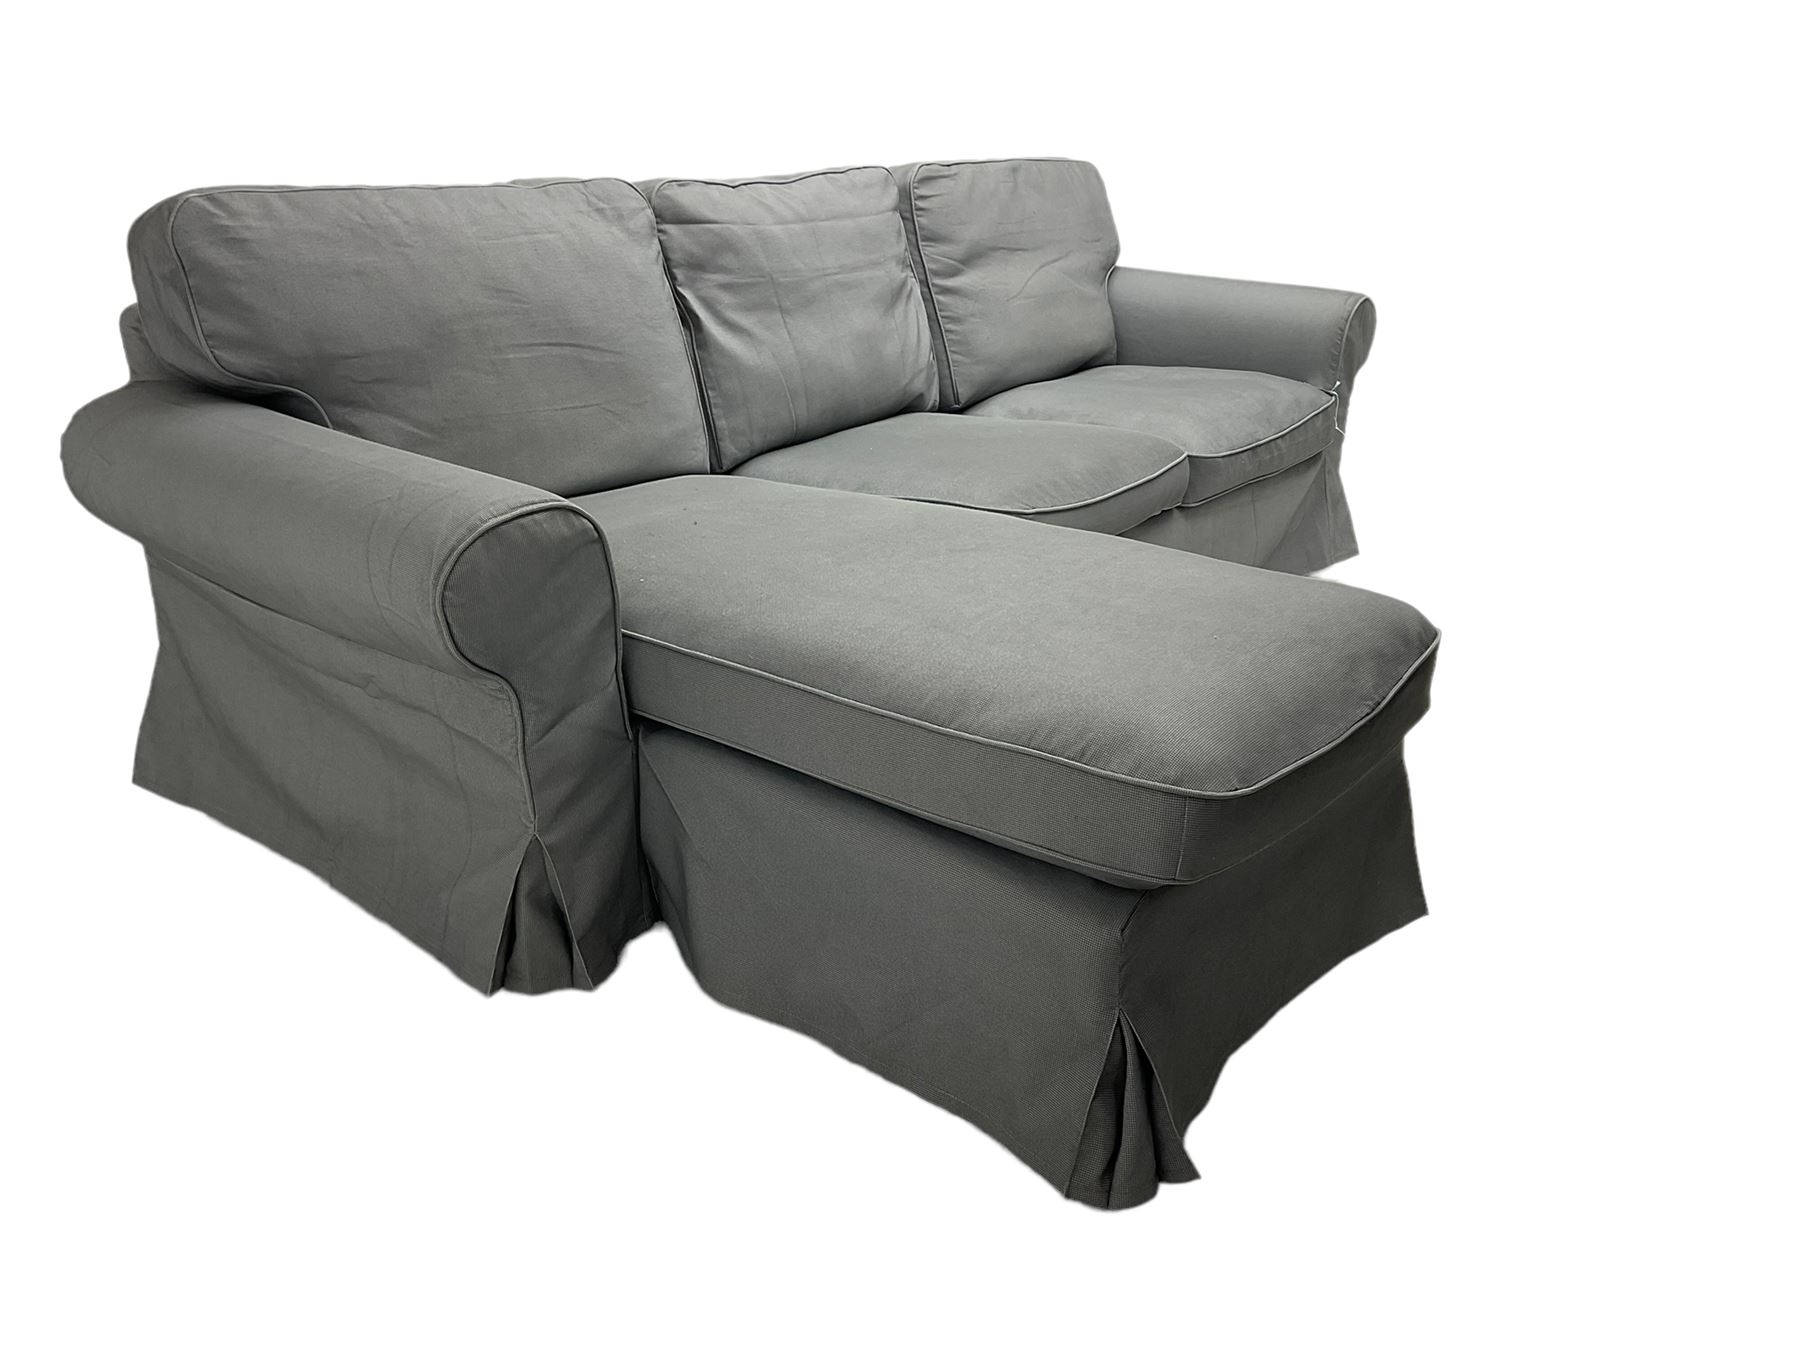 IKEA - 'EKTORP' three seat corner sofa - Image 6 of 6